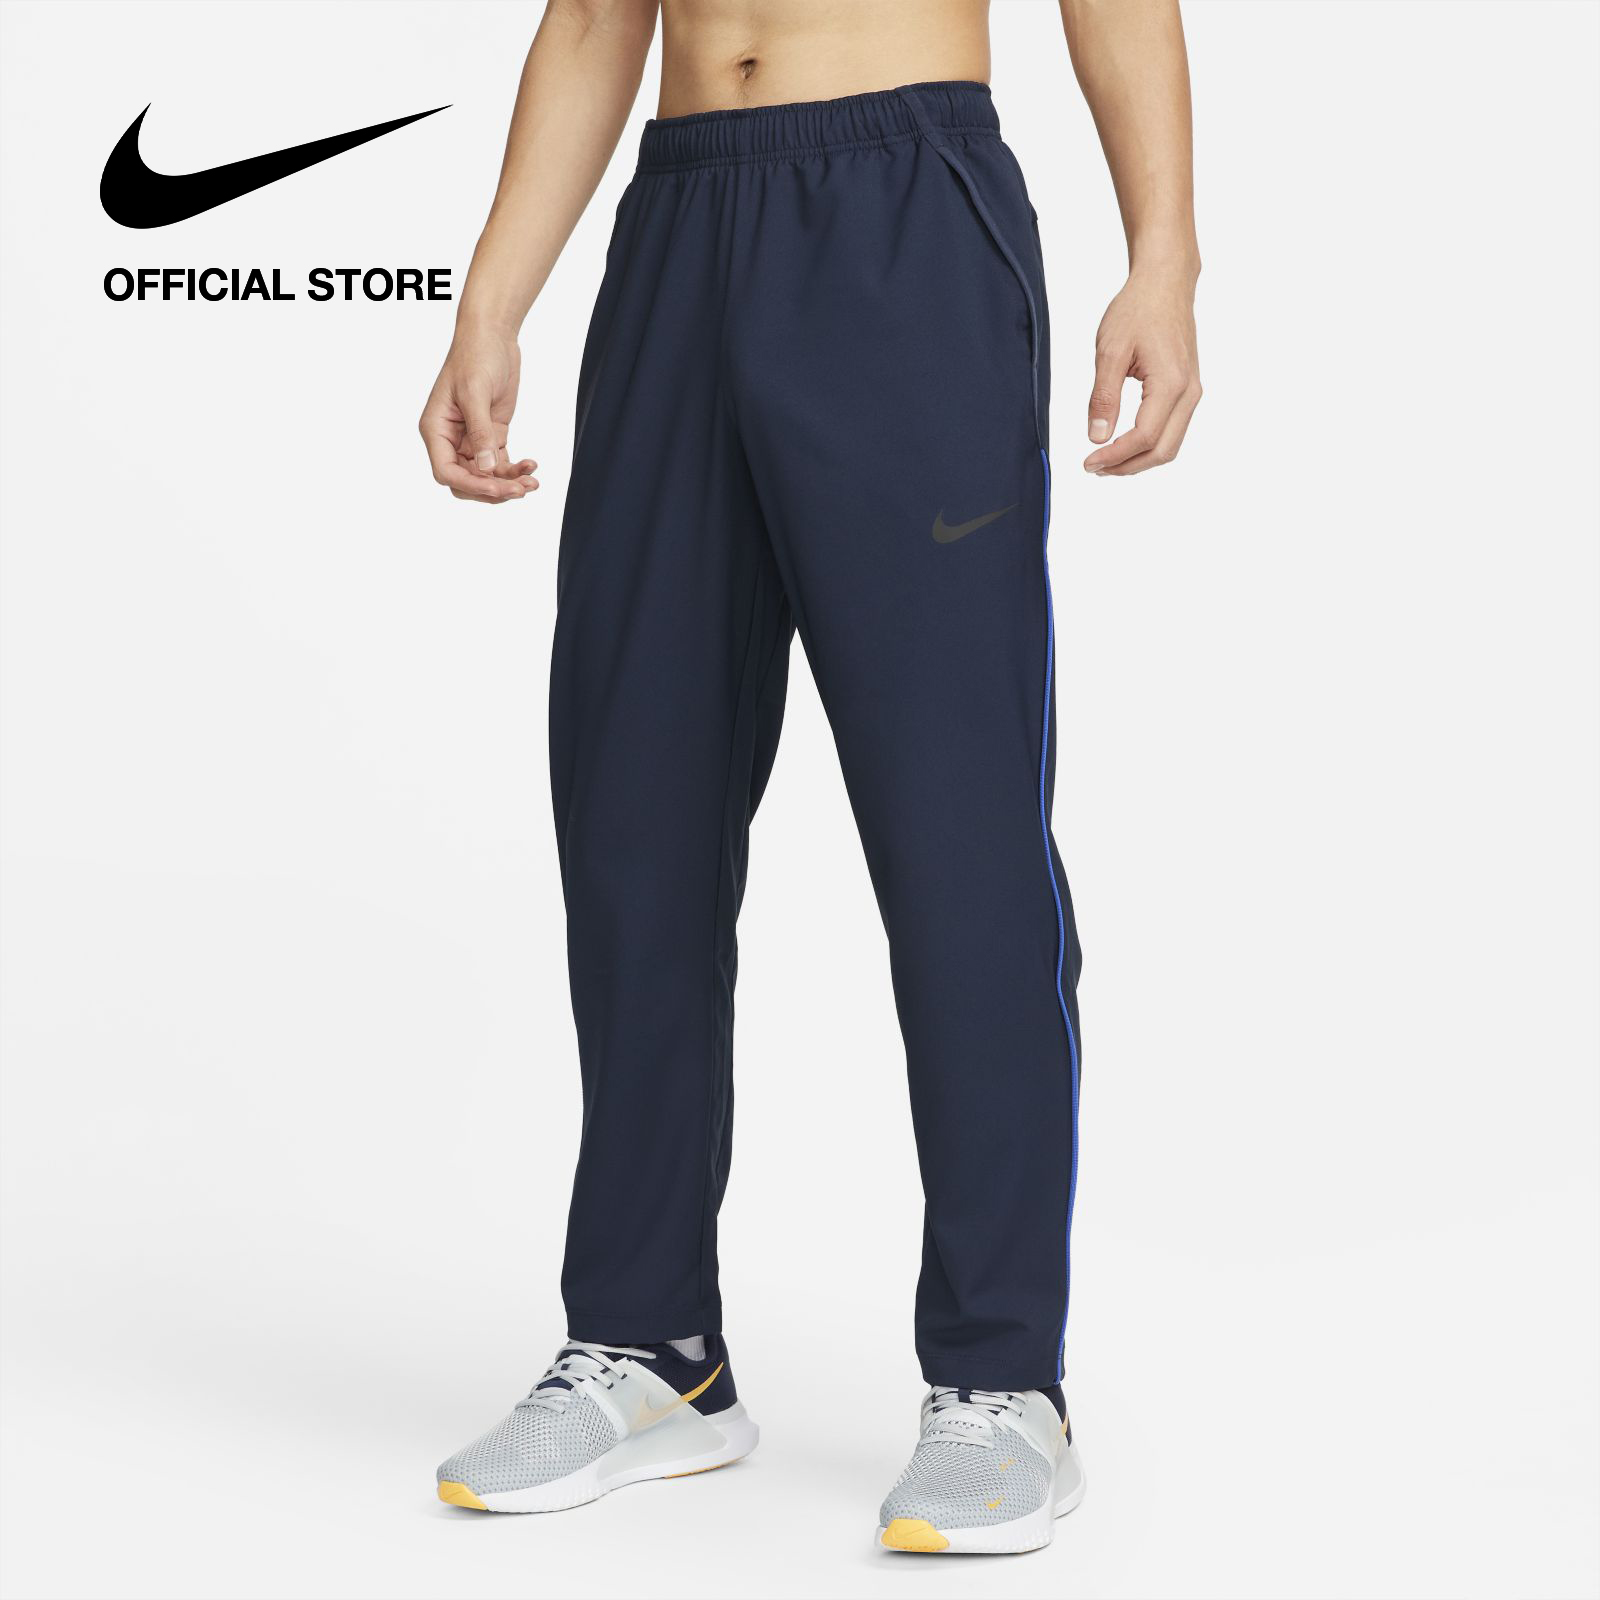 Nike Dri-FIT Men's Woven Team Training Pants - Obsidian